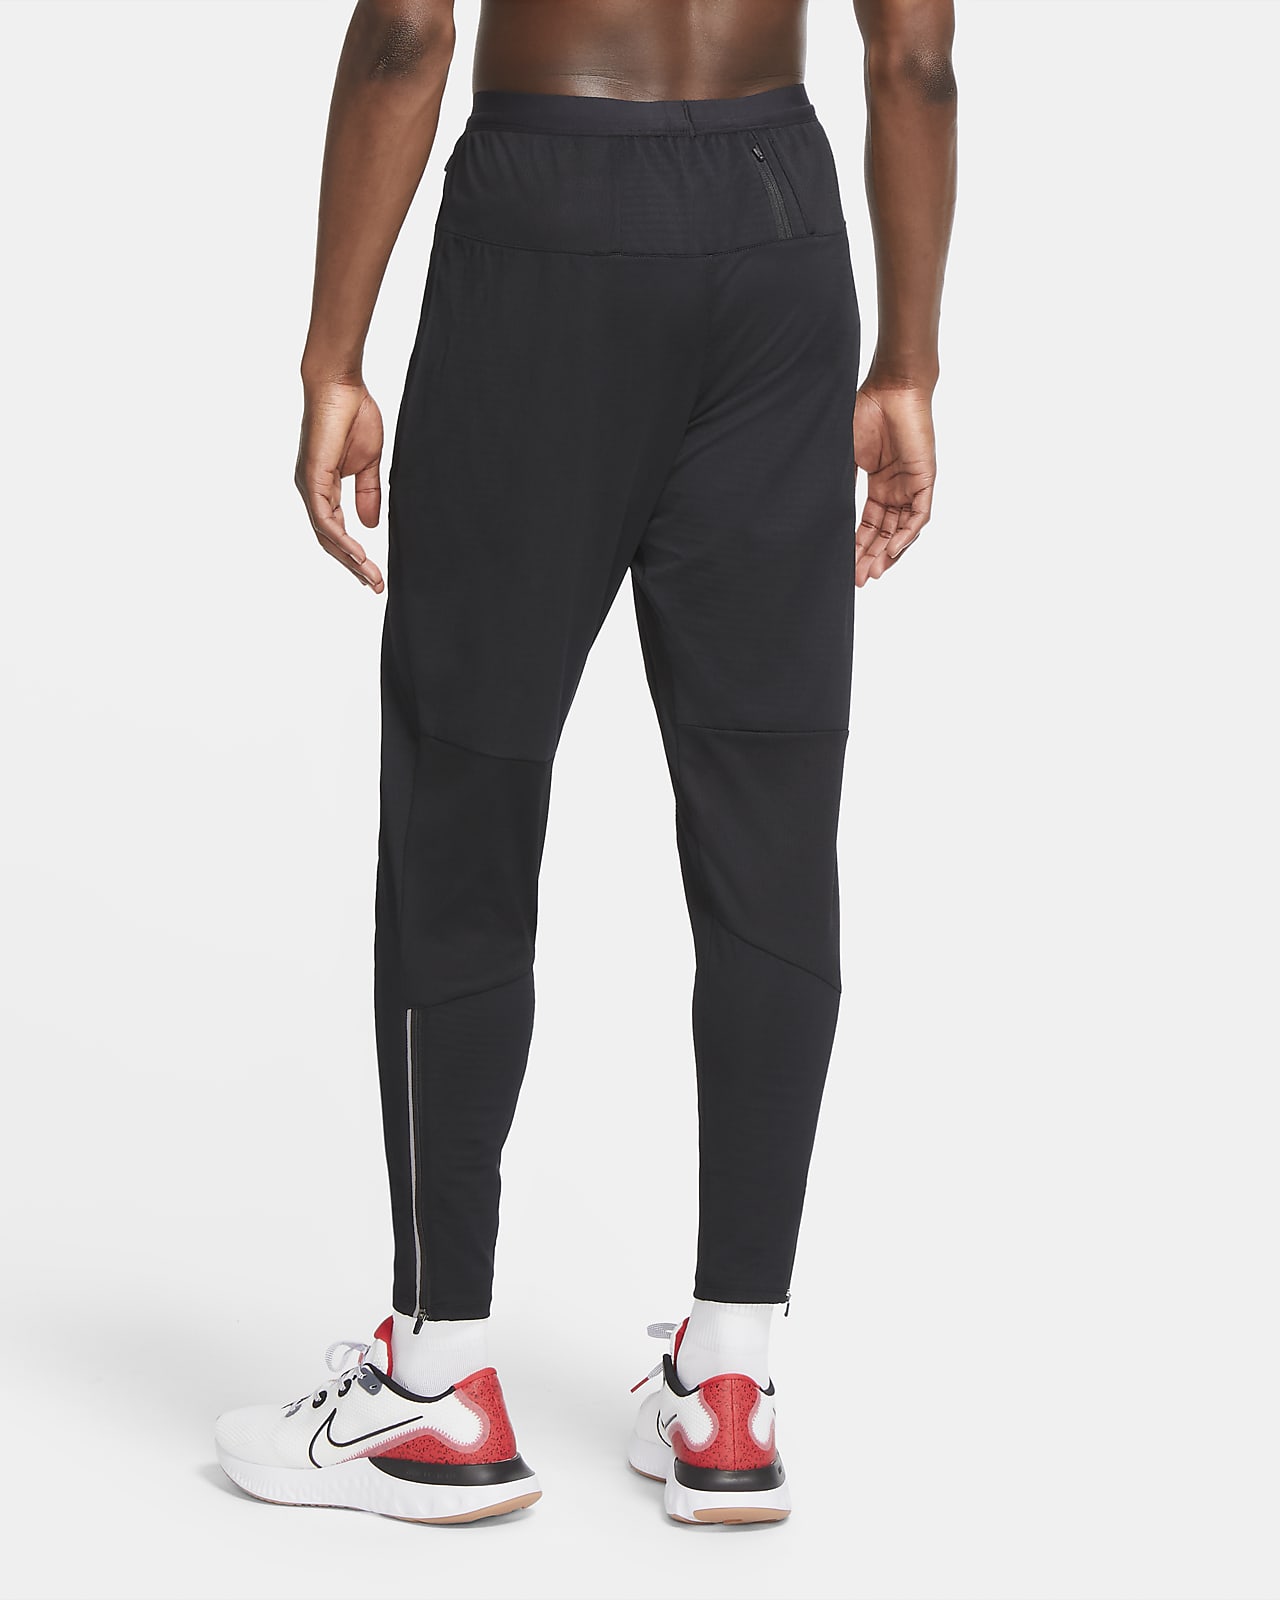 Nike Dri-fit Phenom Elite Knit Trail Running Pants in Natural for Men